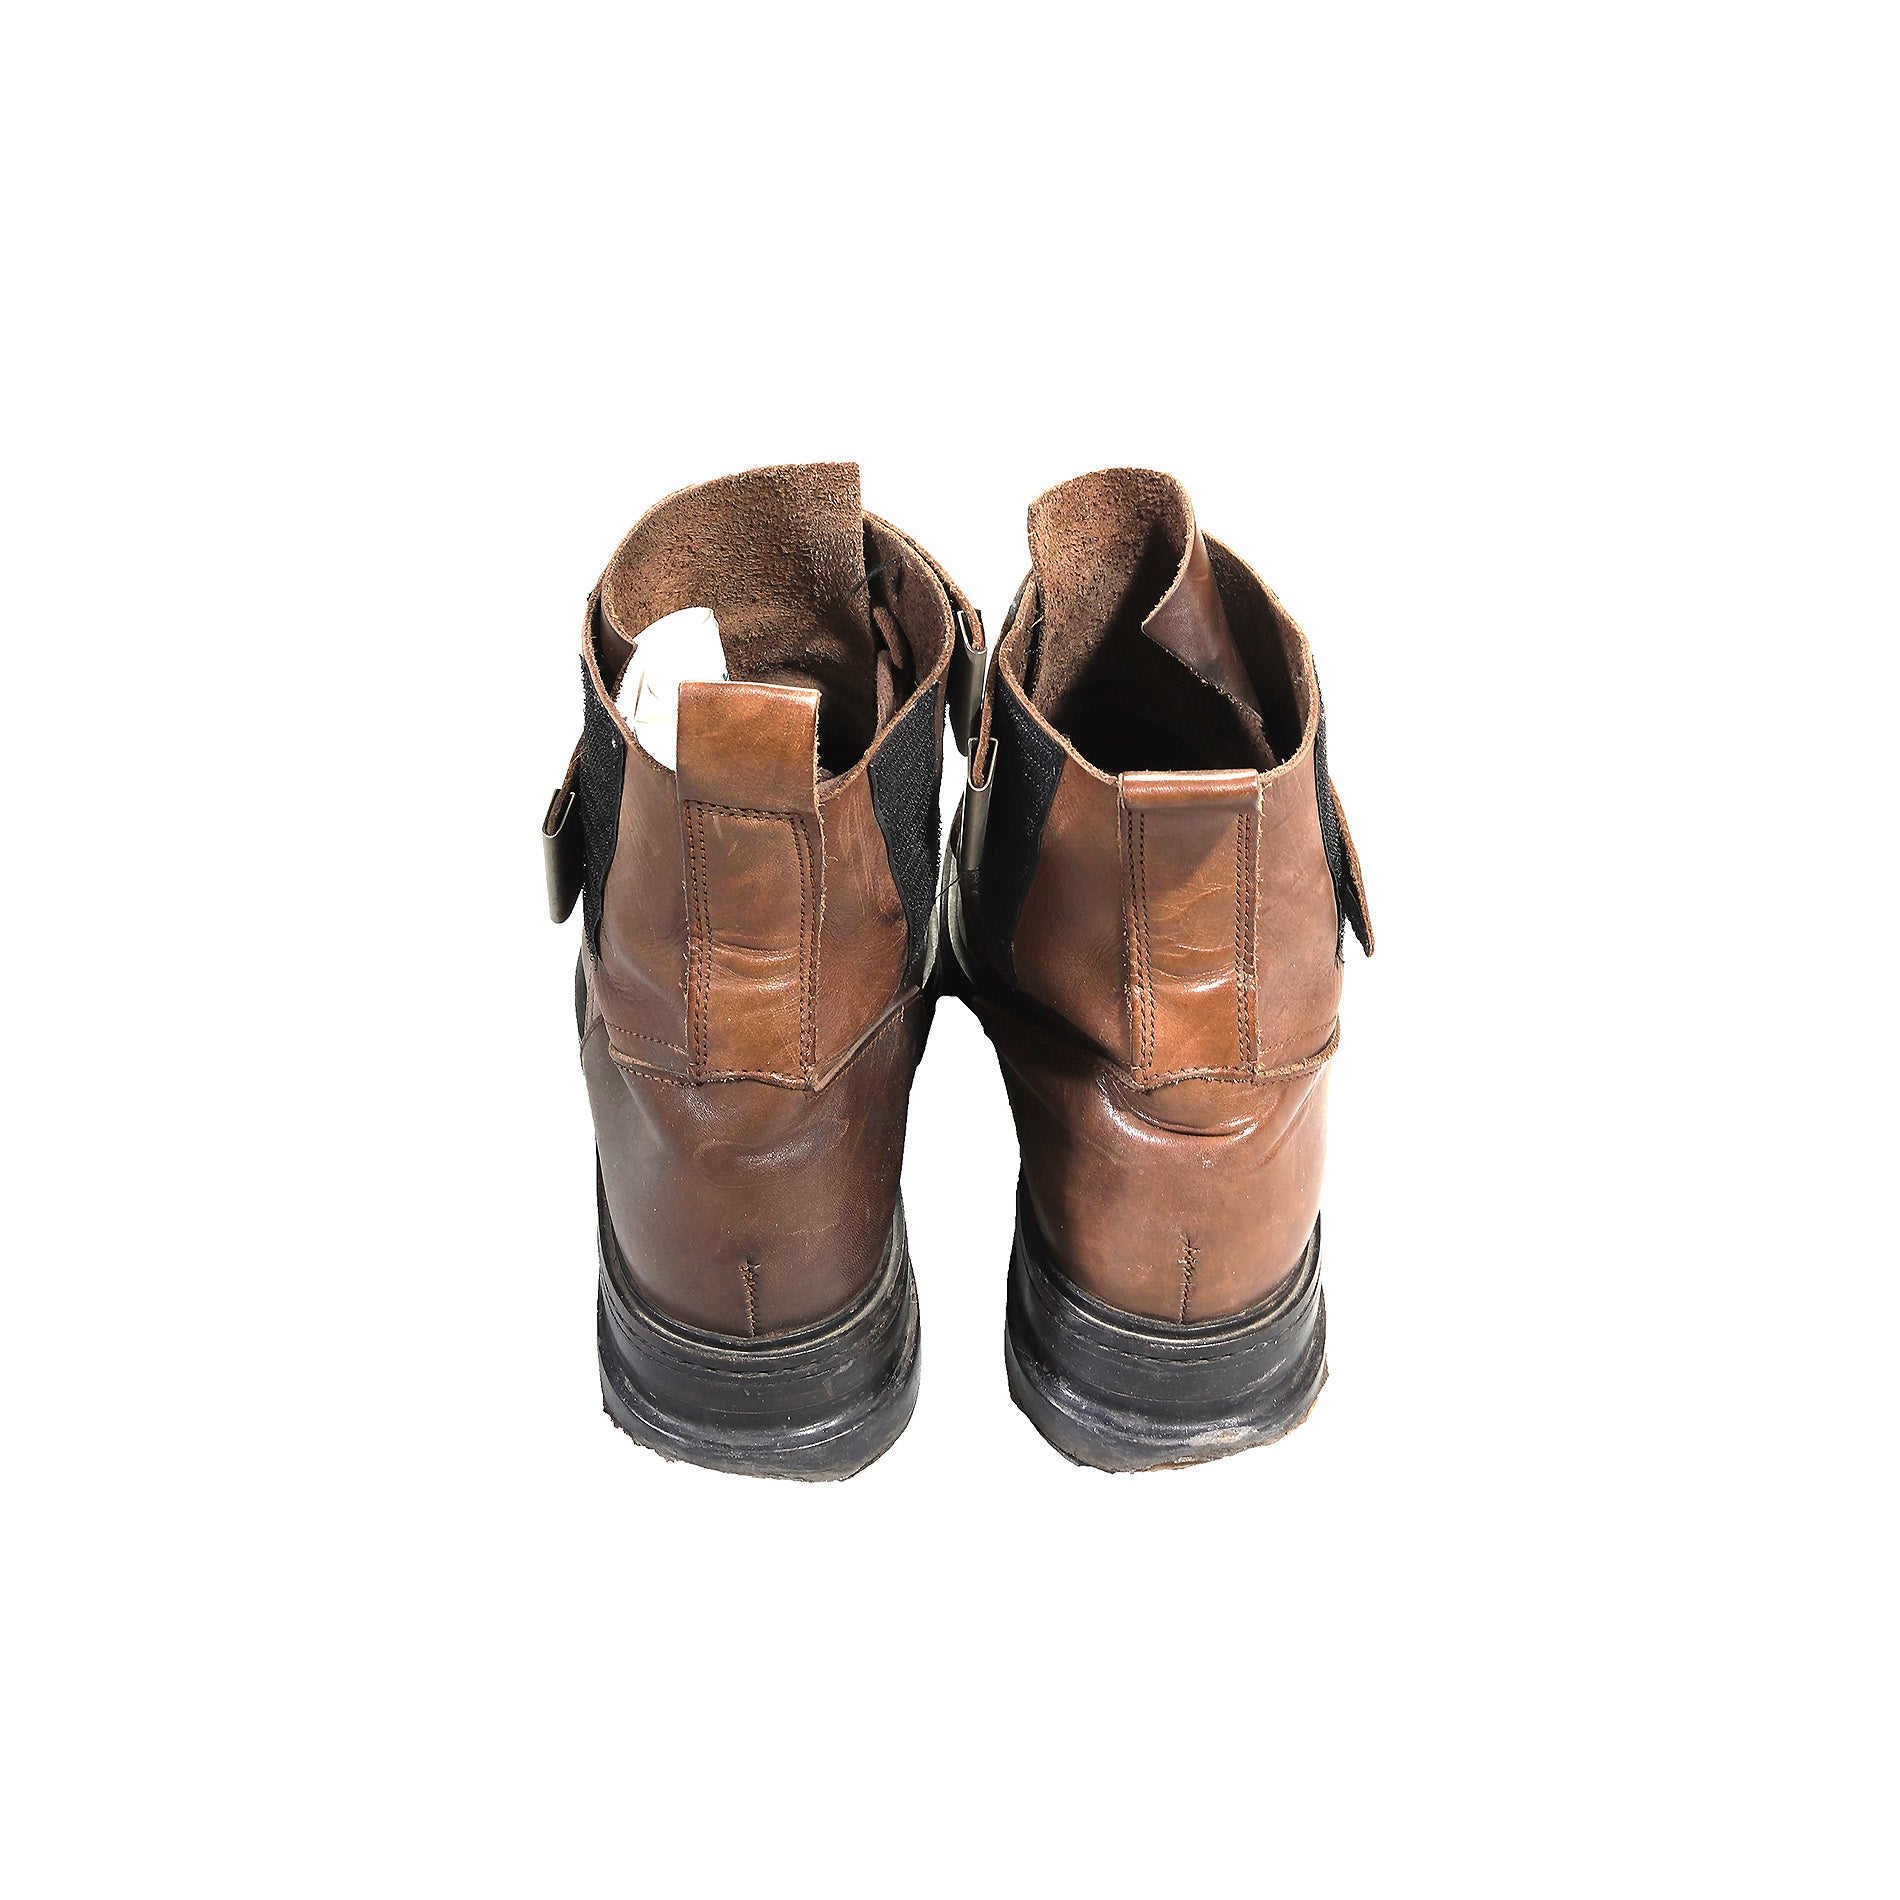 Dirk Bikkembergs 1996 Velcro Leather Boots